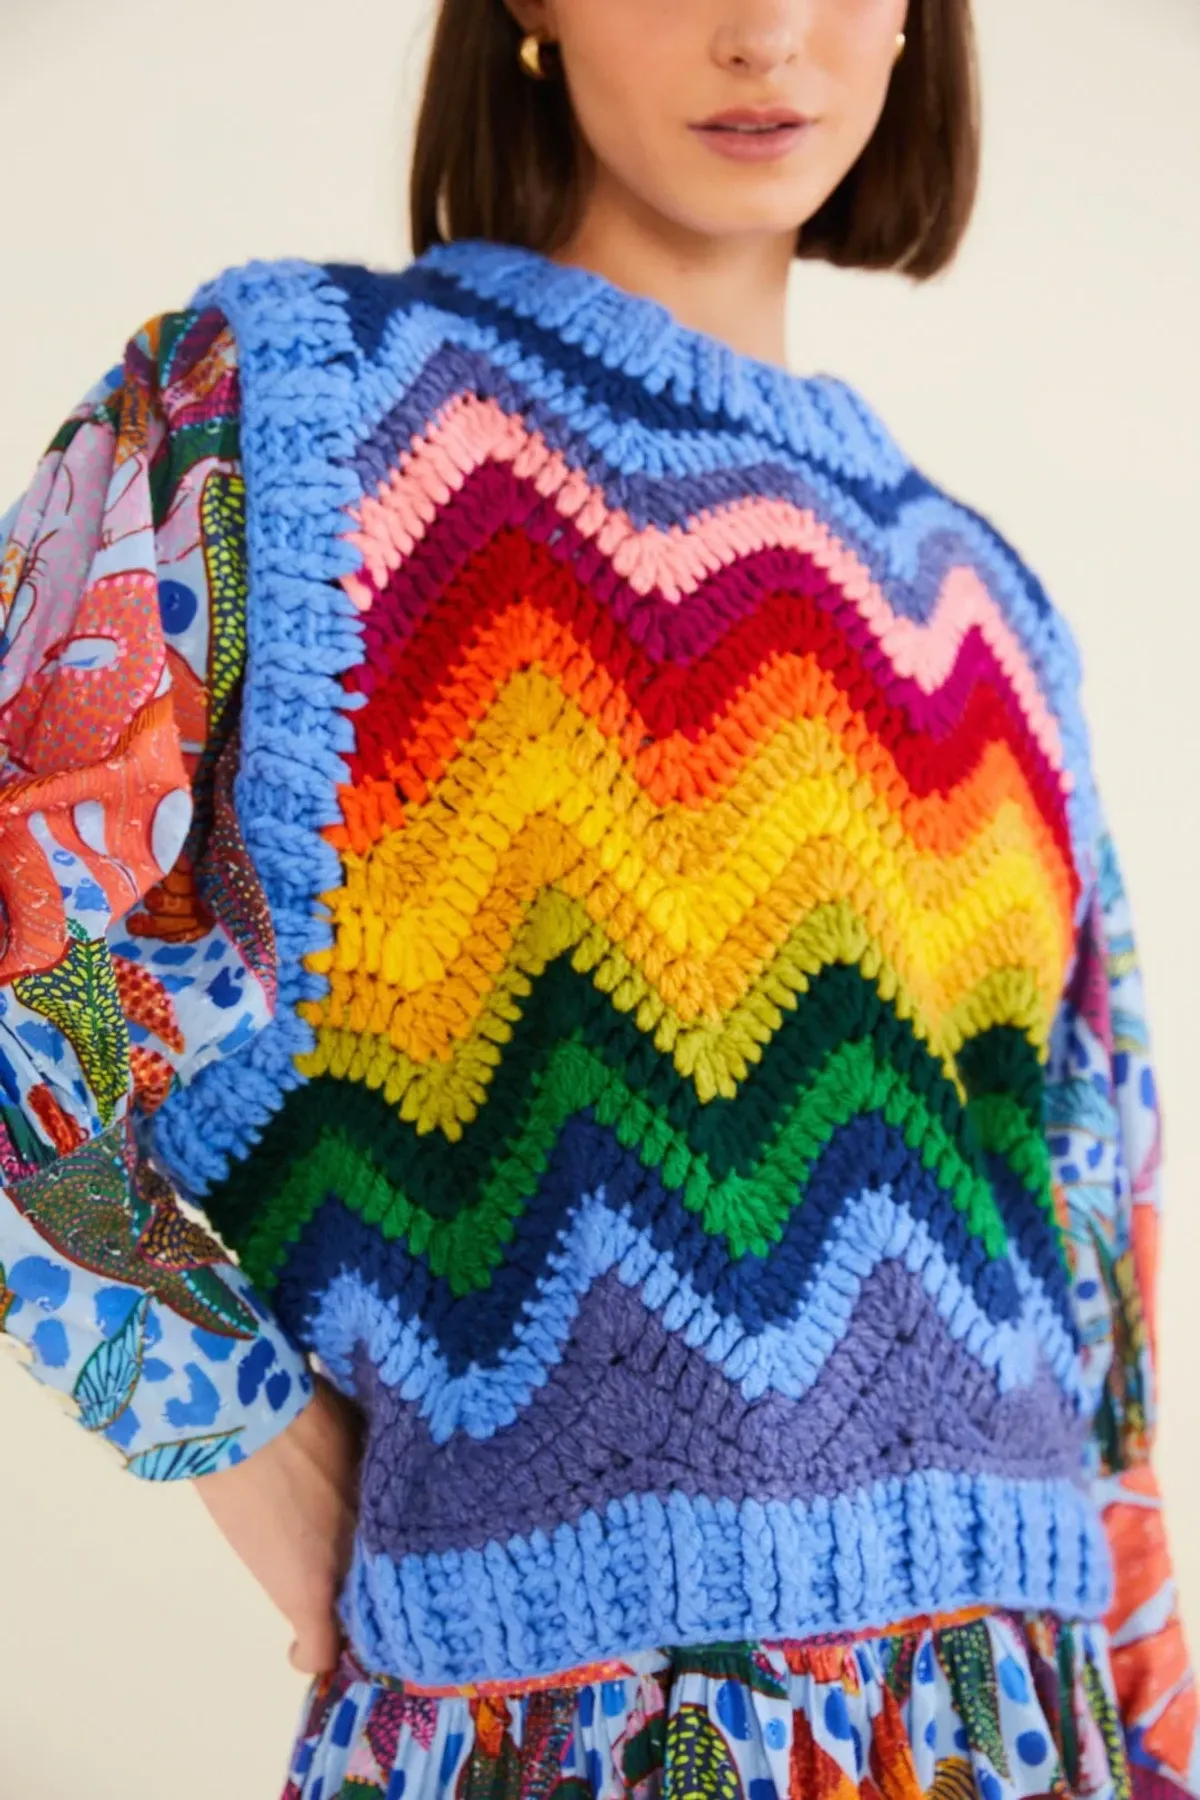 Crochet Is The 70s Trend We've Been Waiting For